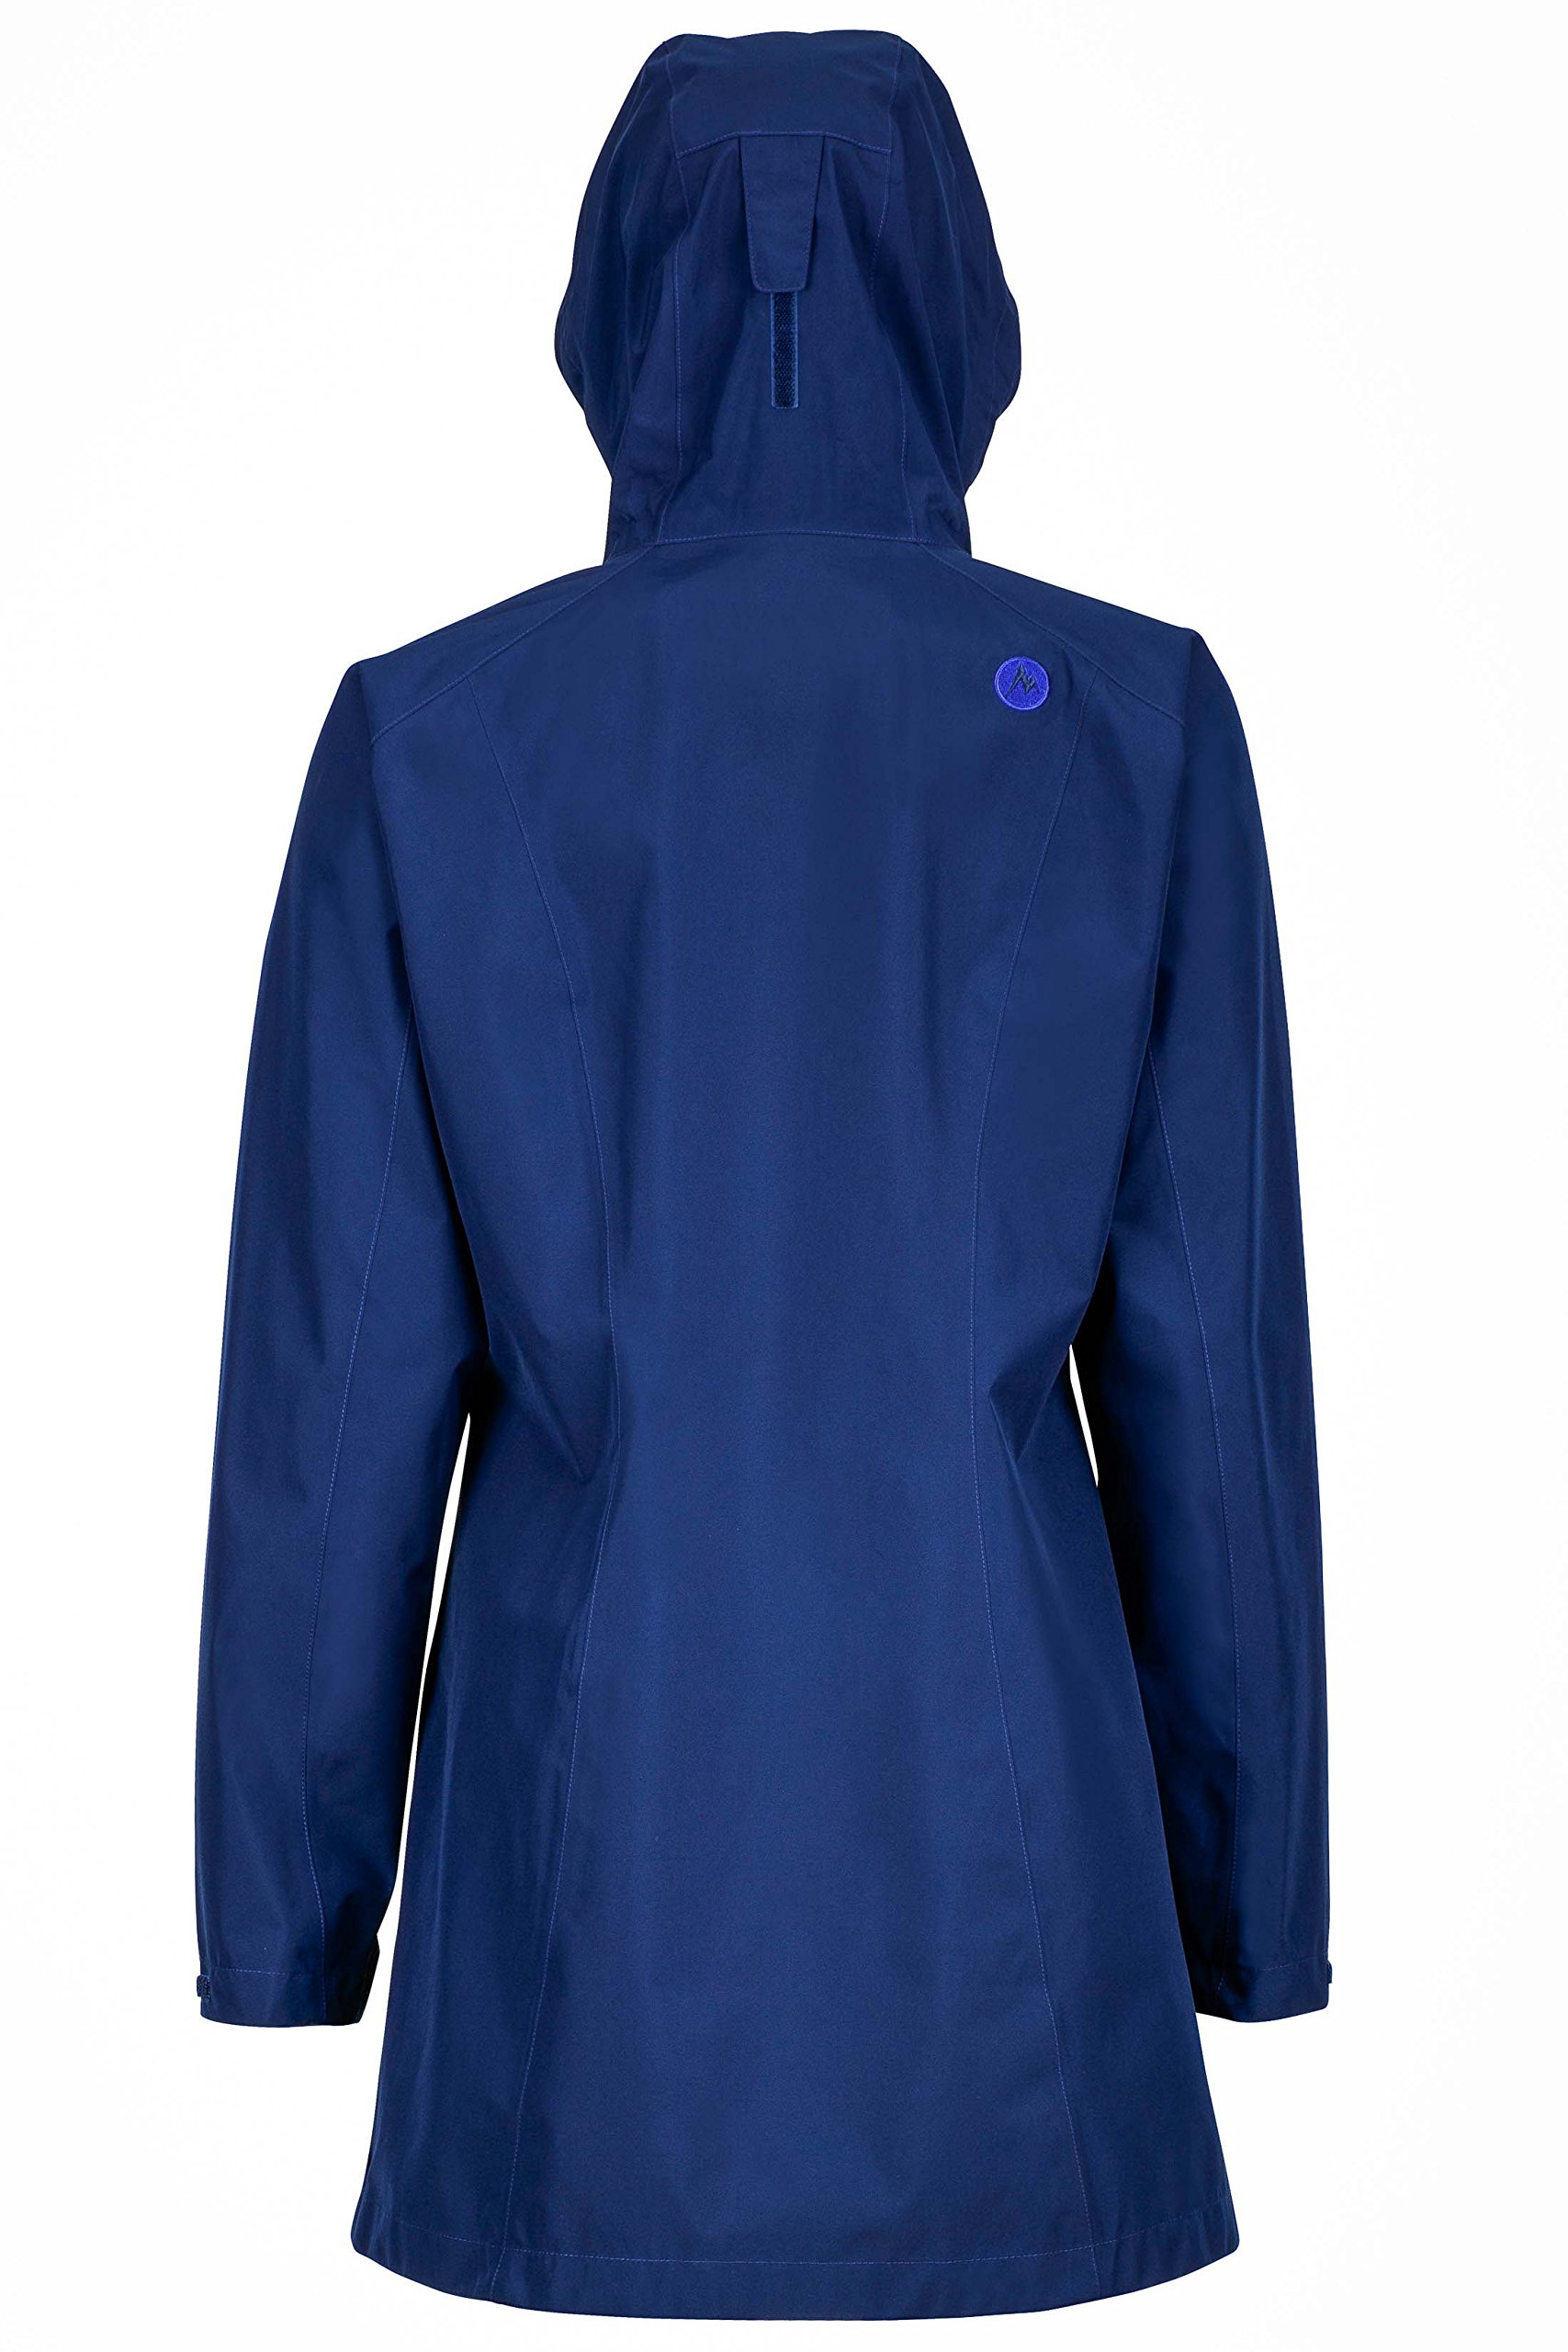 Marmot Women's Essential Lightweight Waterproof Rain Jacket, GORE-TEX with PACLITE Technology